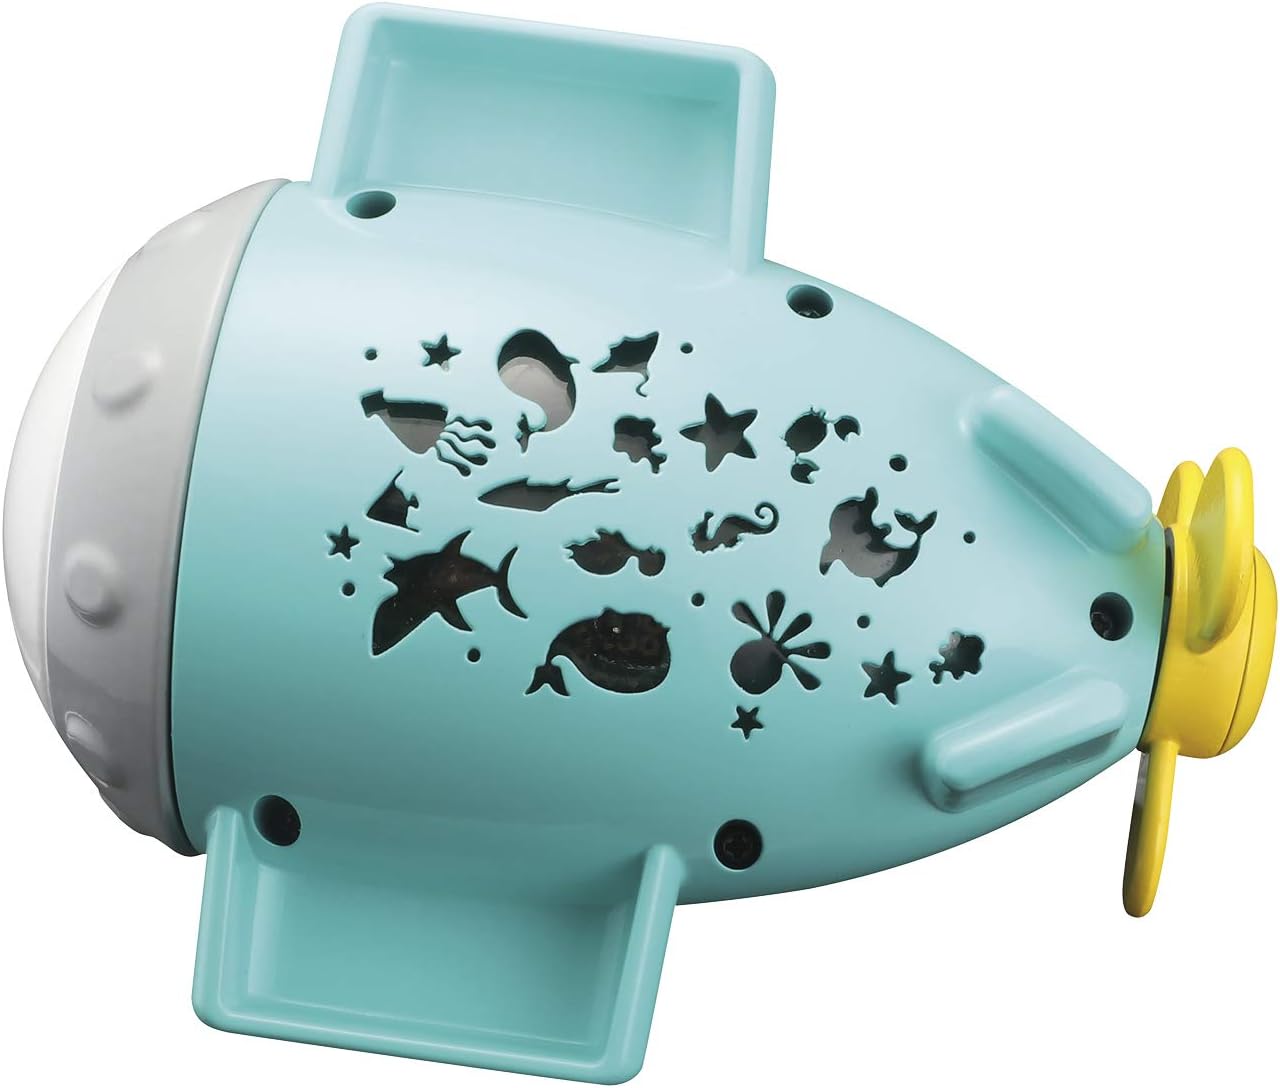 Splash N' Play Submarine Projector